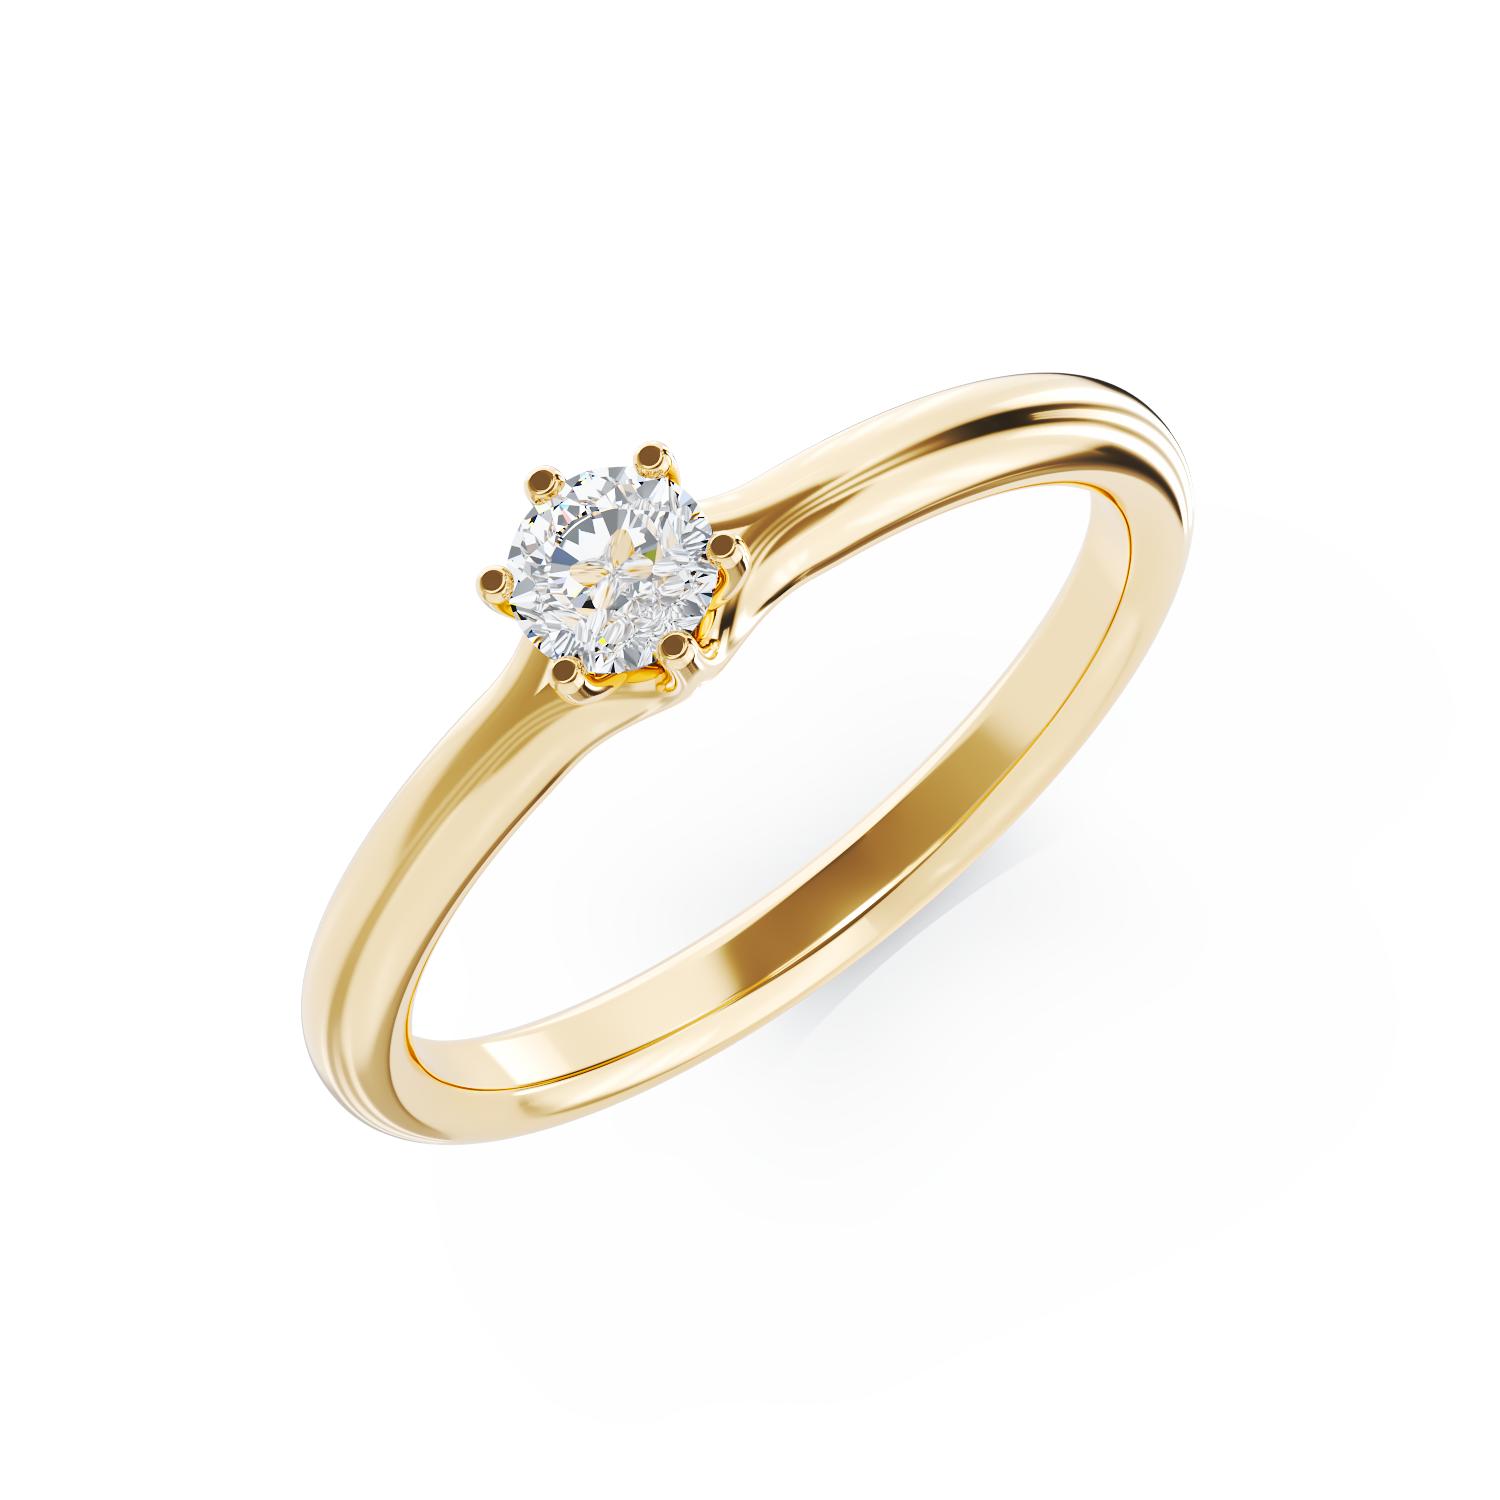 Inel de logodna din aur galben de 18K cu un diamant solitaire de 0.14ct